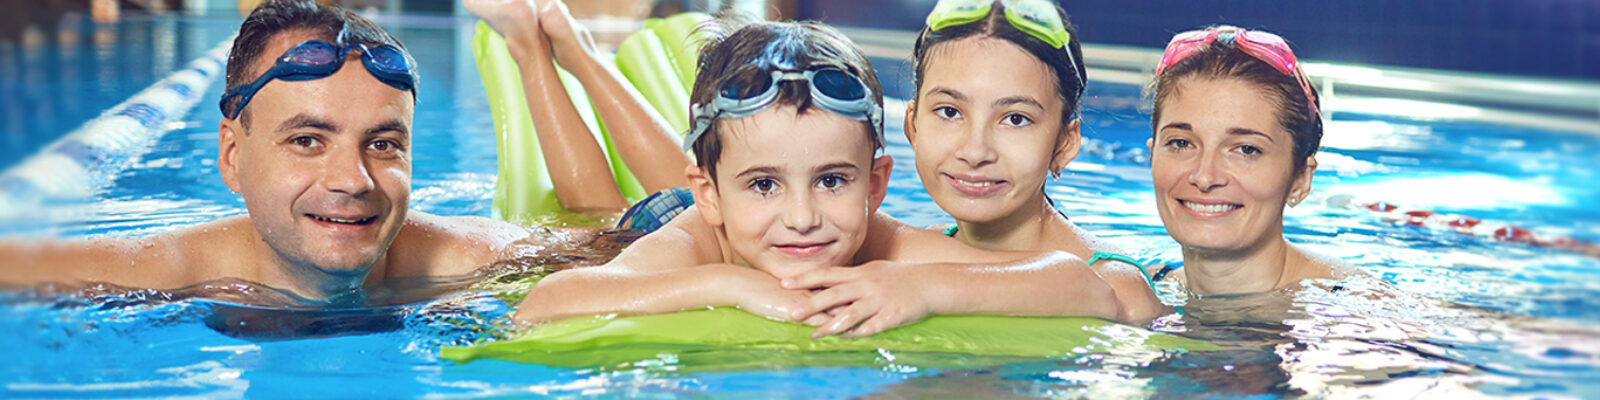 summer membership family in pool